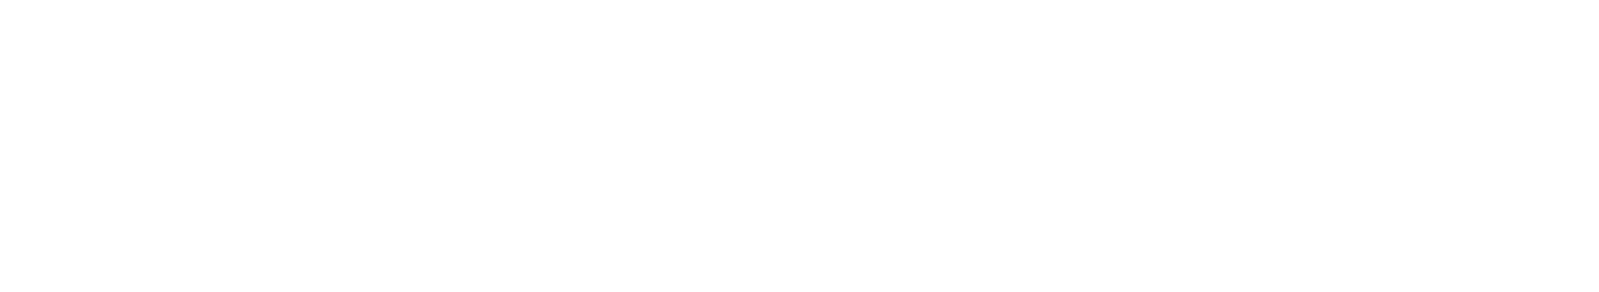 Eaton Vance logo large for dark backgrounds (transparent PNG)